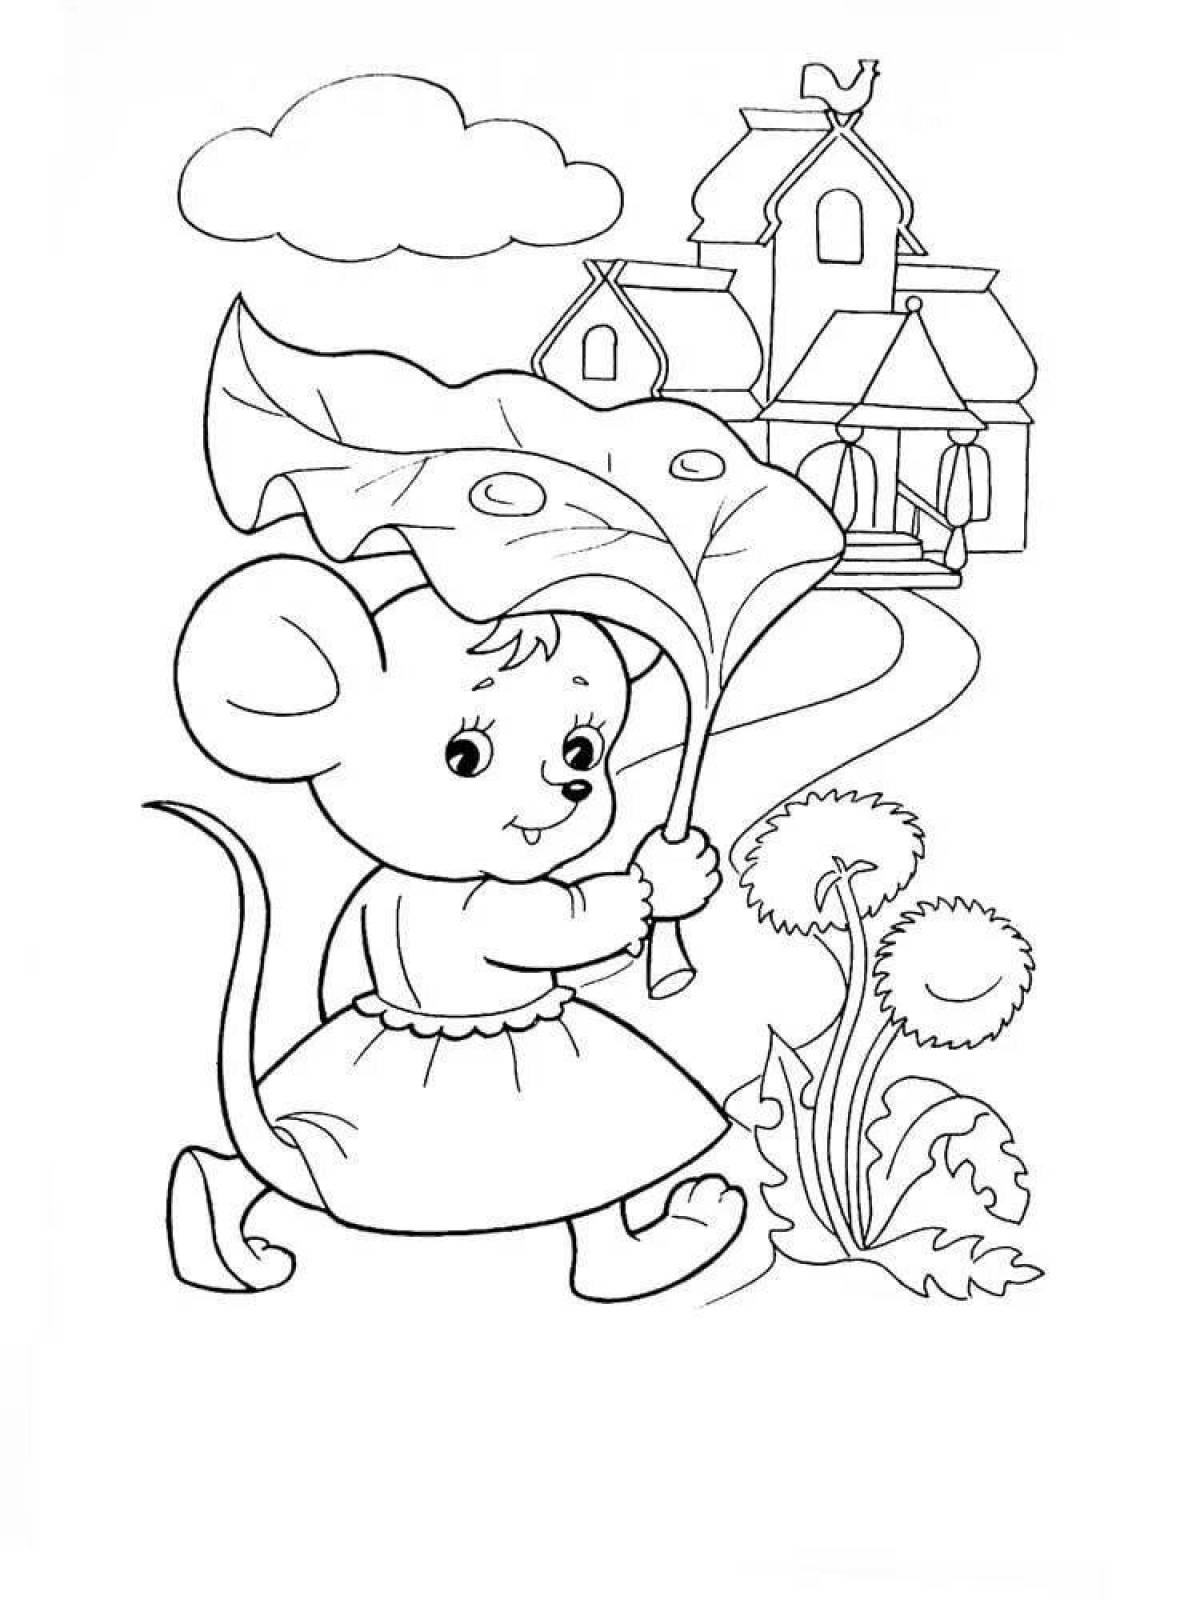 Coloring cute mouse norushka